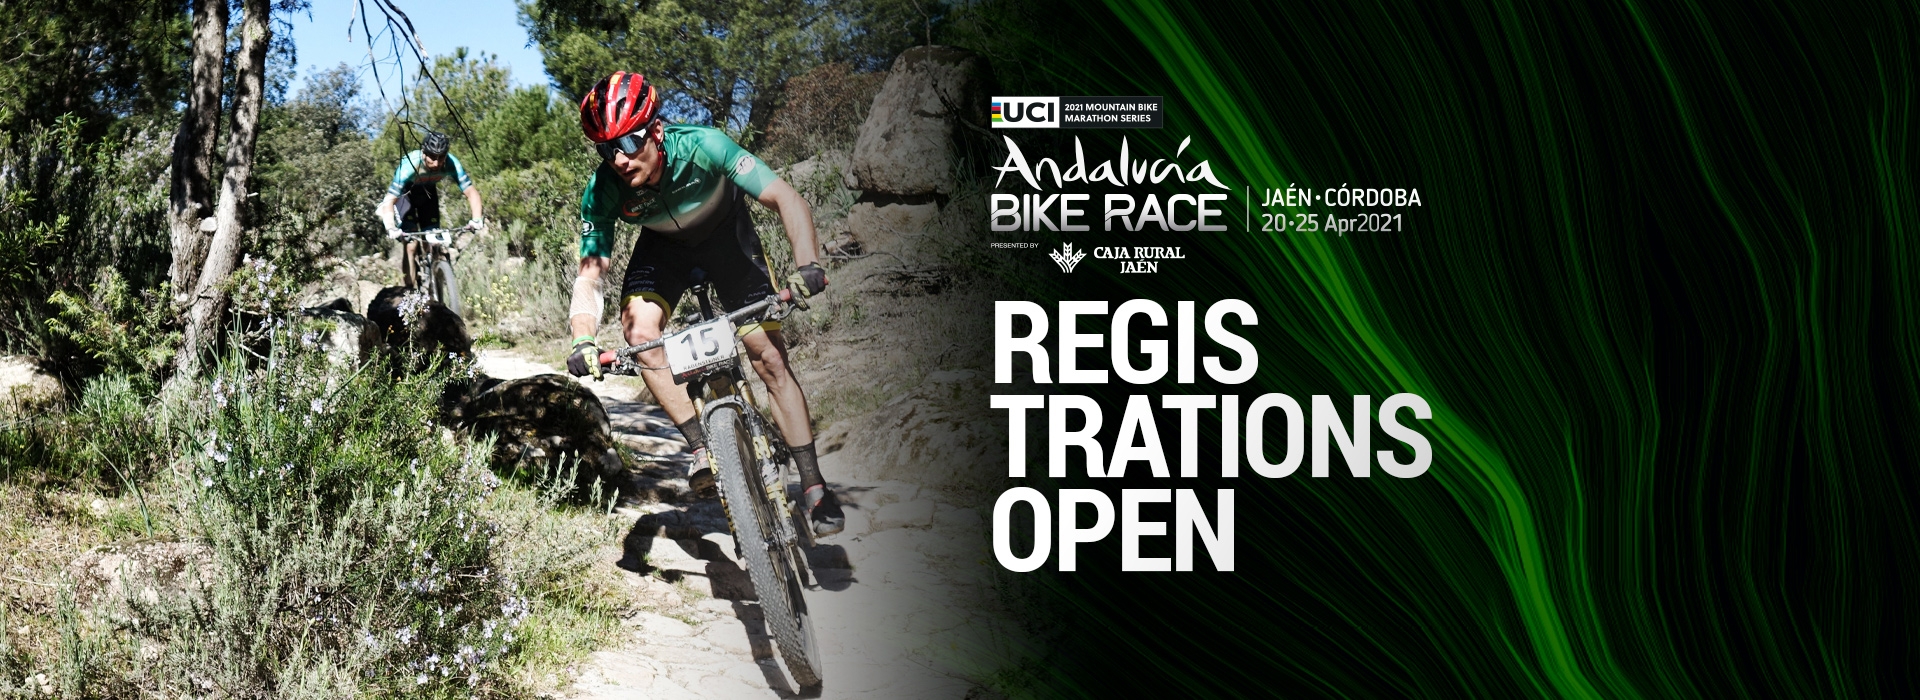 2021 Andalucía Bike Race 2021: registrations open   